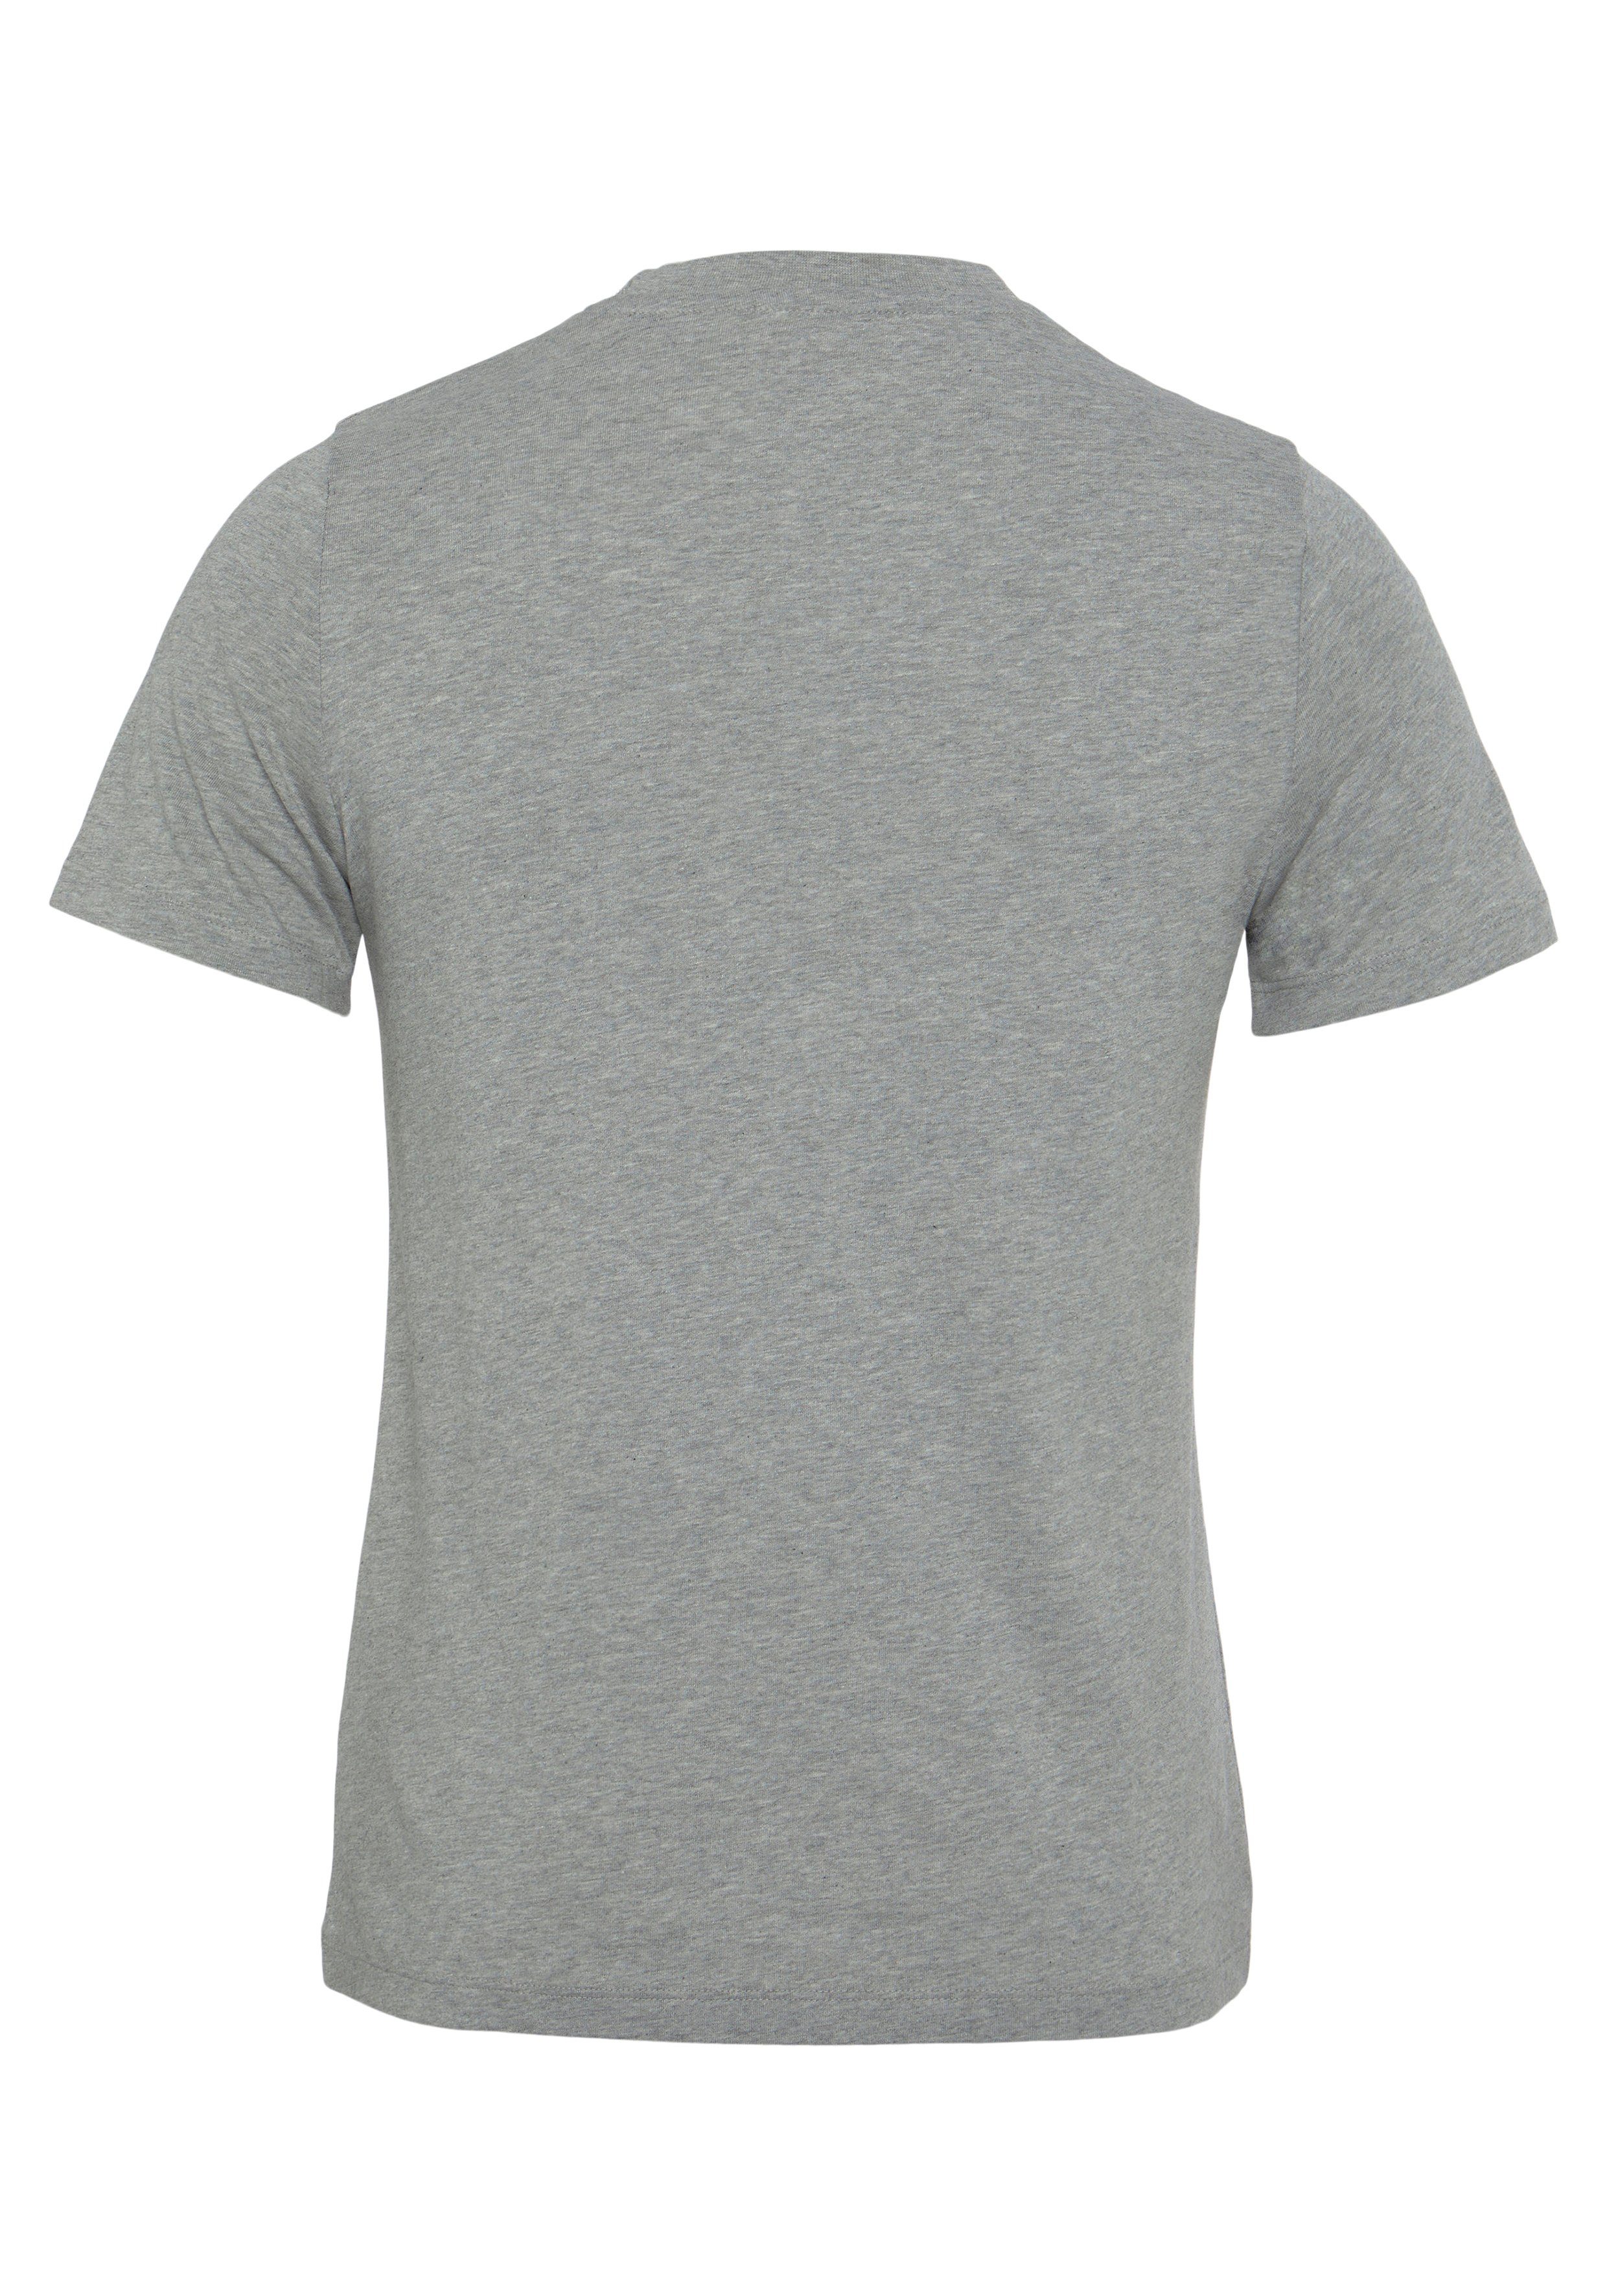 Reebok T-Shirt Reebok Read medium Tee grey heather Graphic